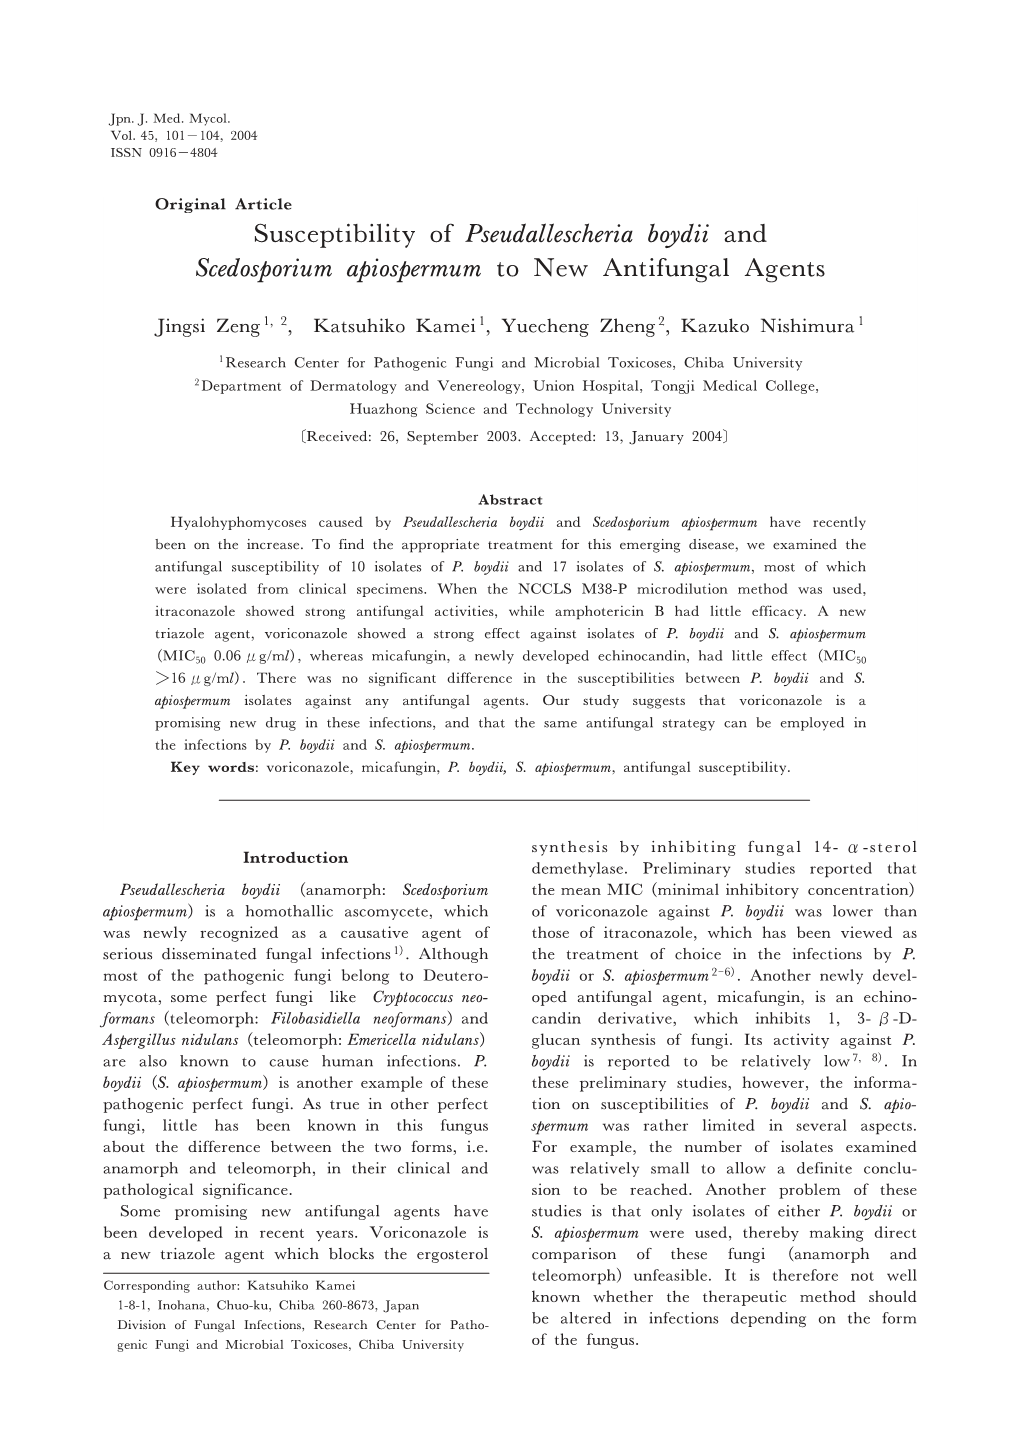 Susceptibility of Pseudallescheria Boydii and Scedosporium Apiospermum to New Antifungal Agents